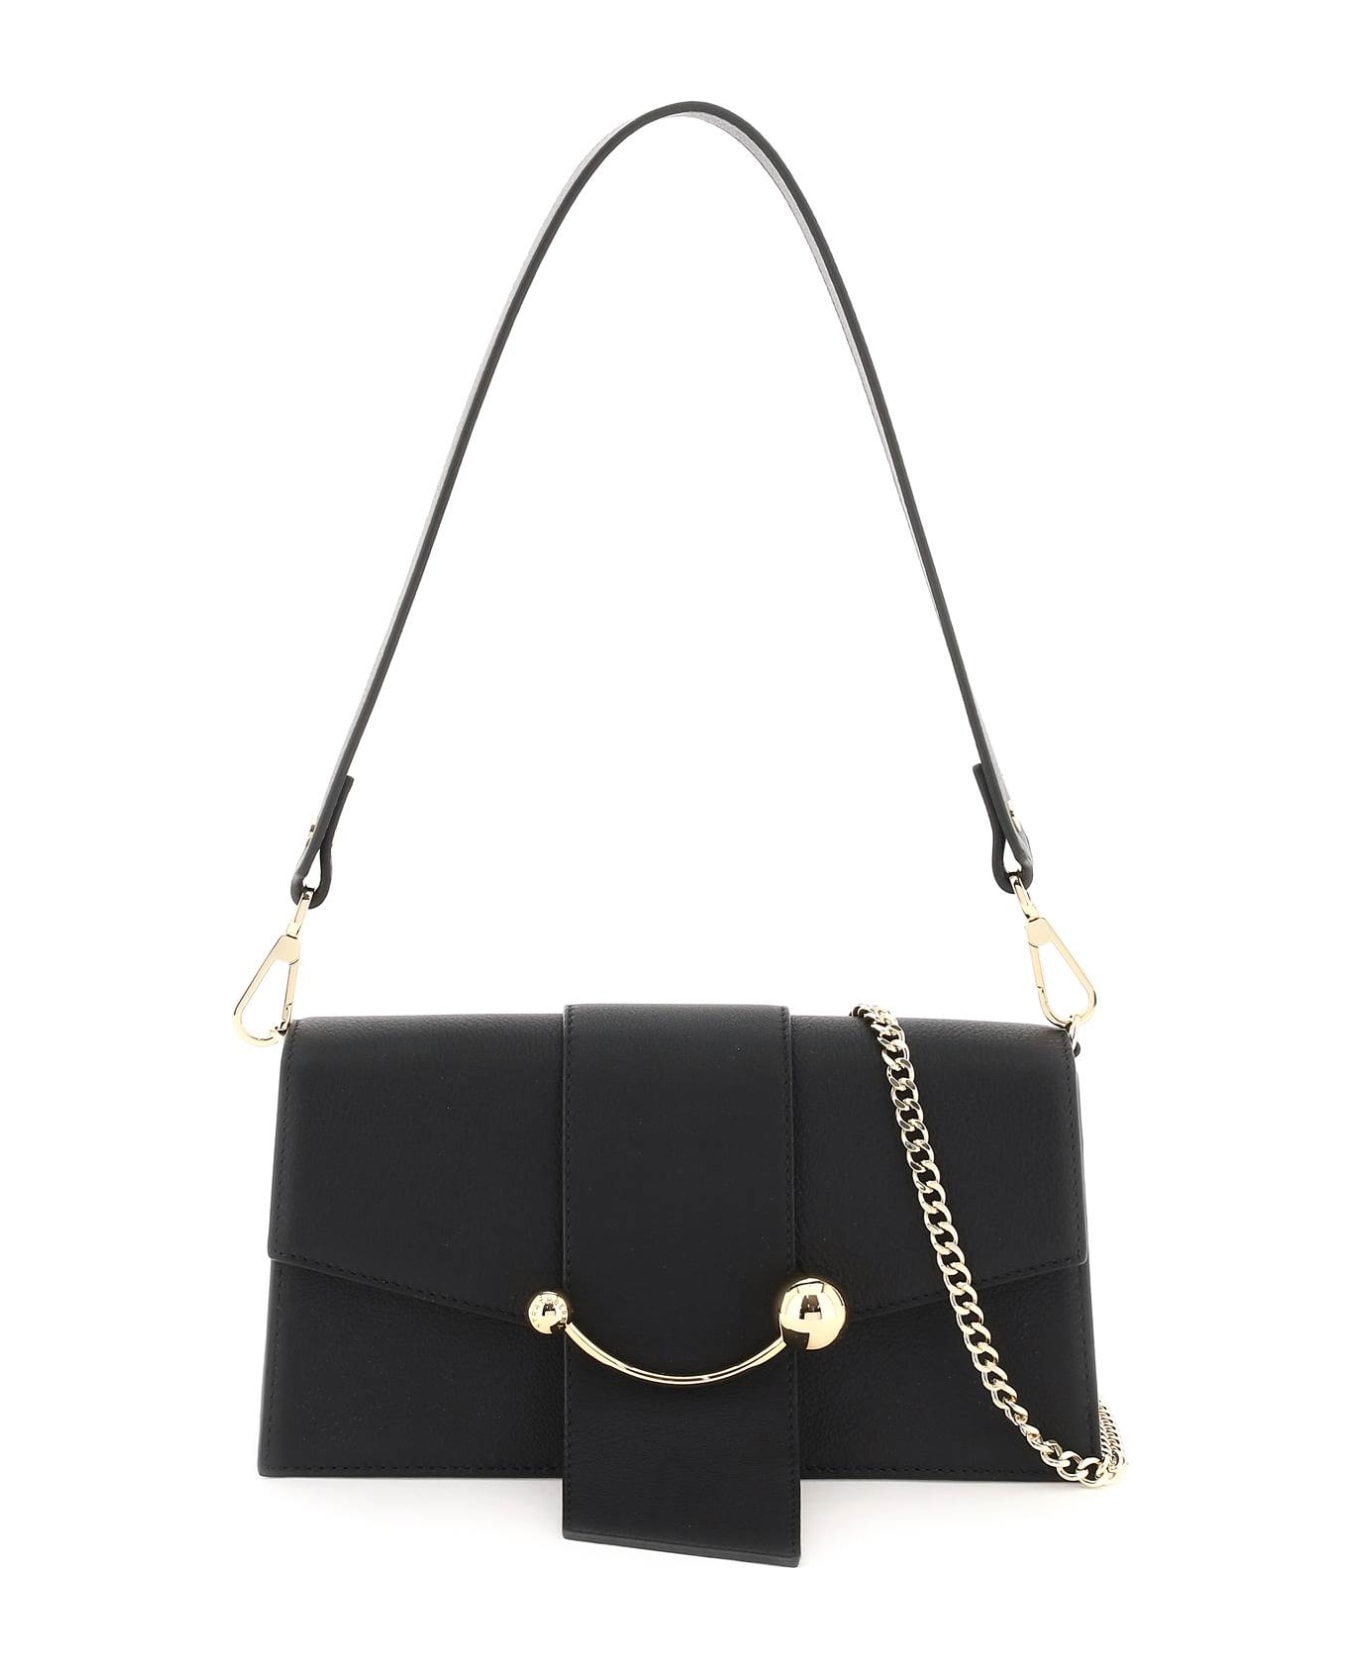 Strathberry 'mini Crescent' Leather Bag - BLACK (Black)